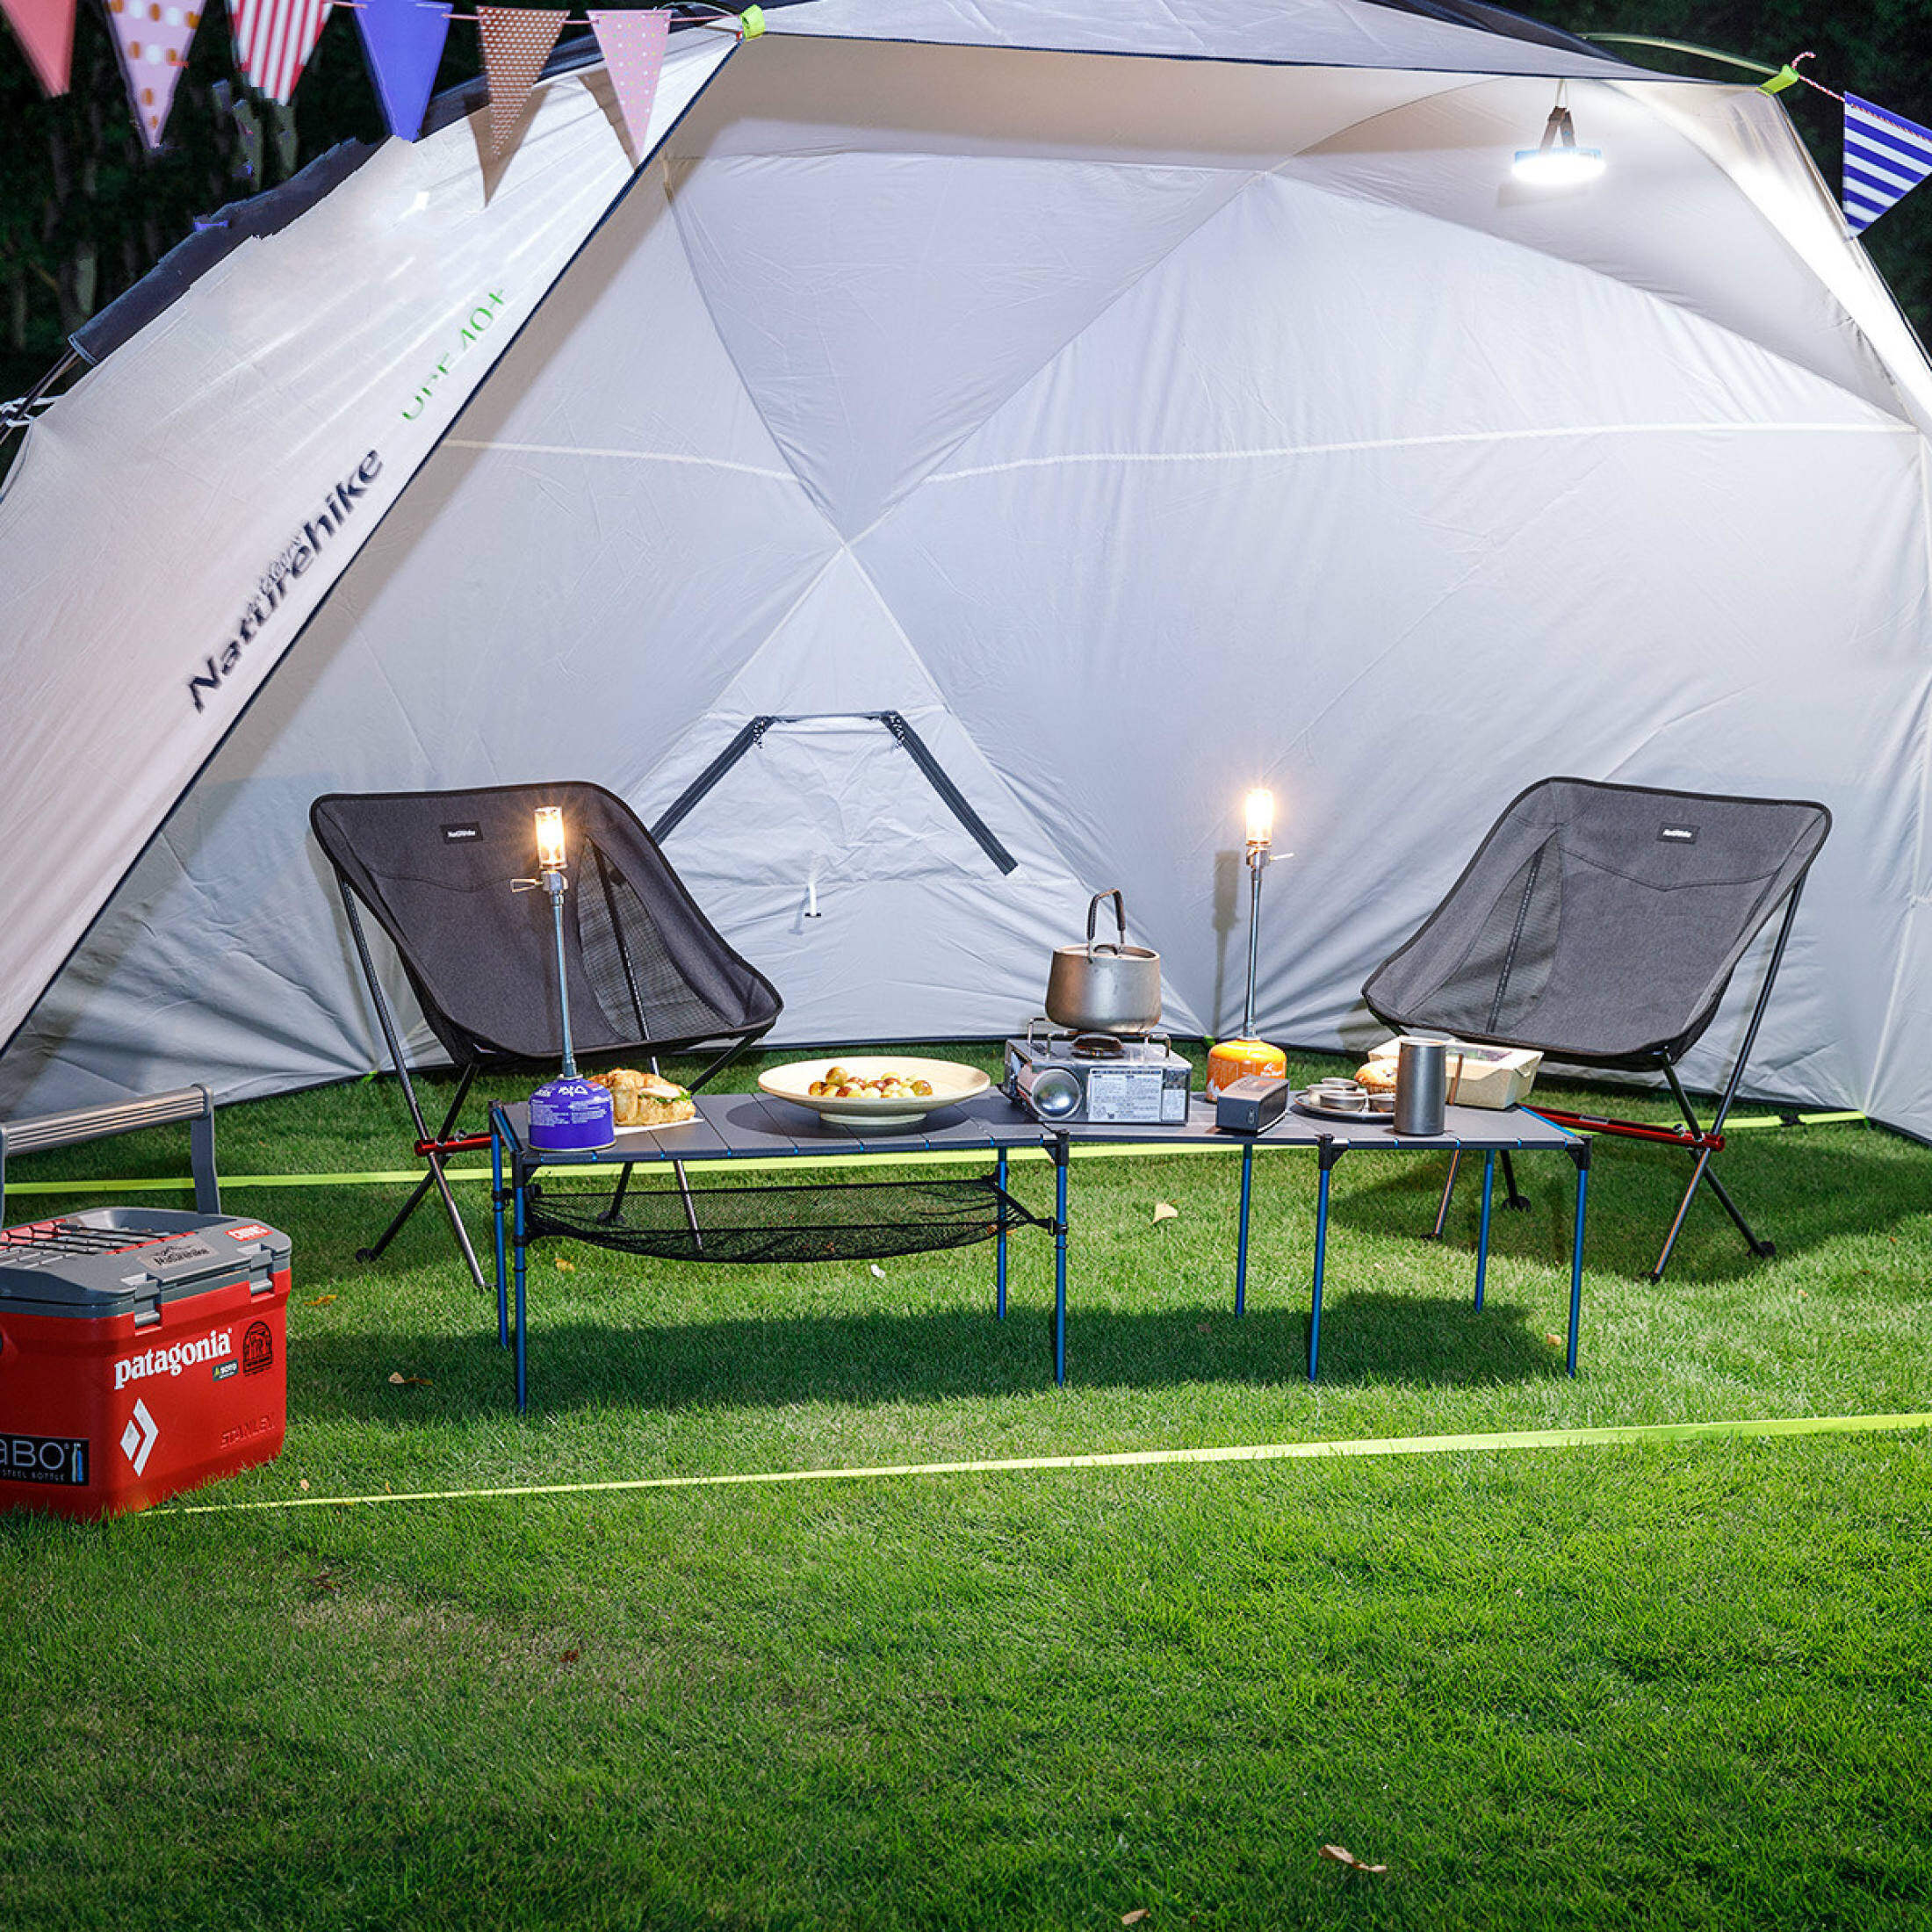 Sun camping. Палатка-шатер Holiday Кемп. Shelter. Палатка naturehike Foldable Portable changing Tent. Naturehike Camping Tent. Naturehike палатка большая.